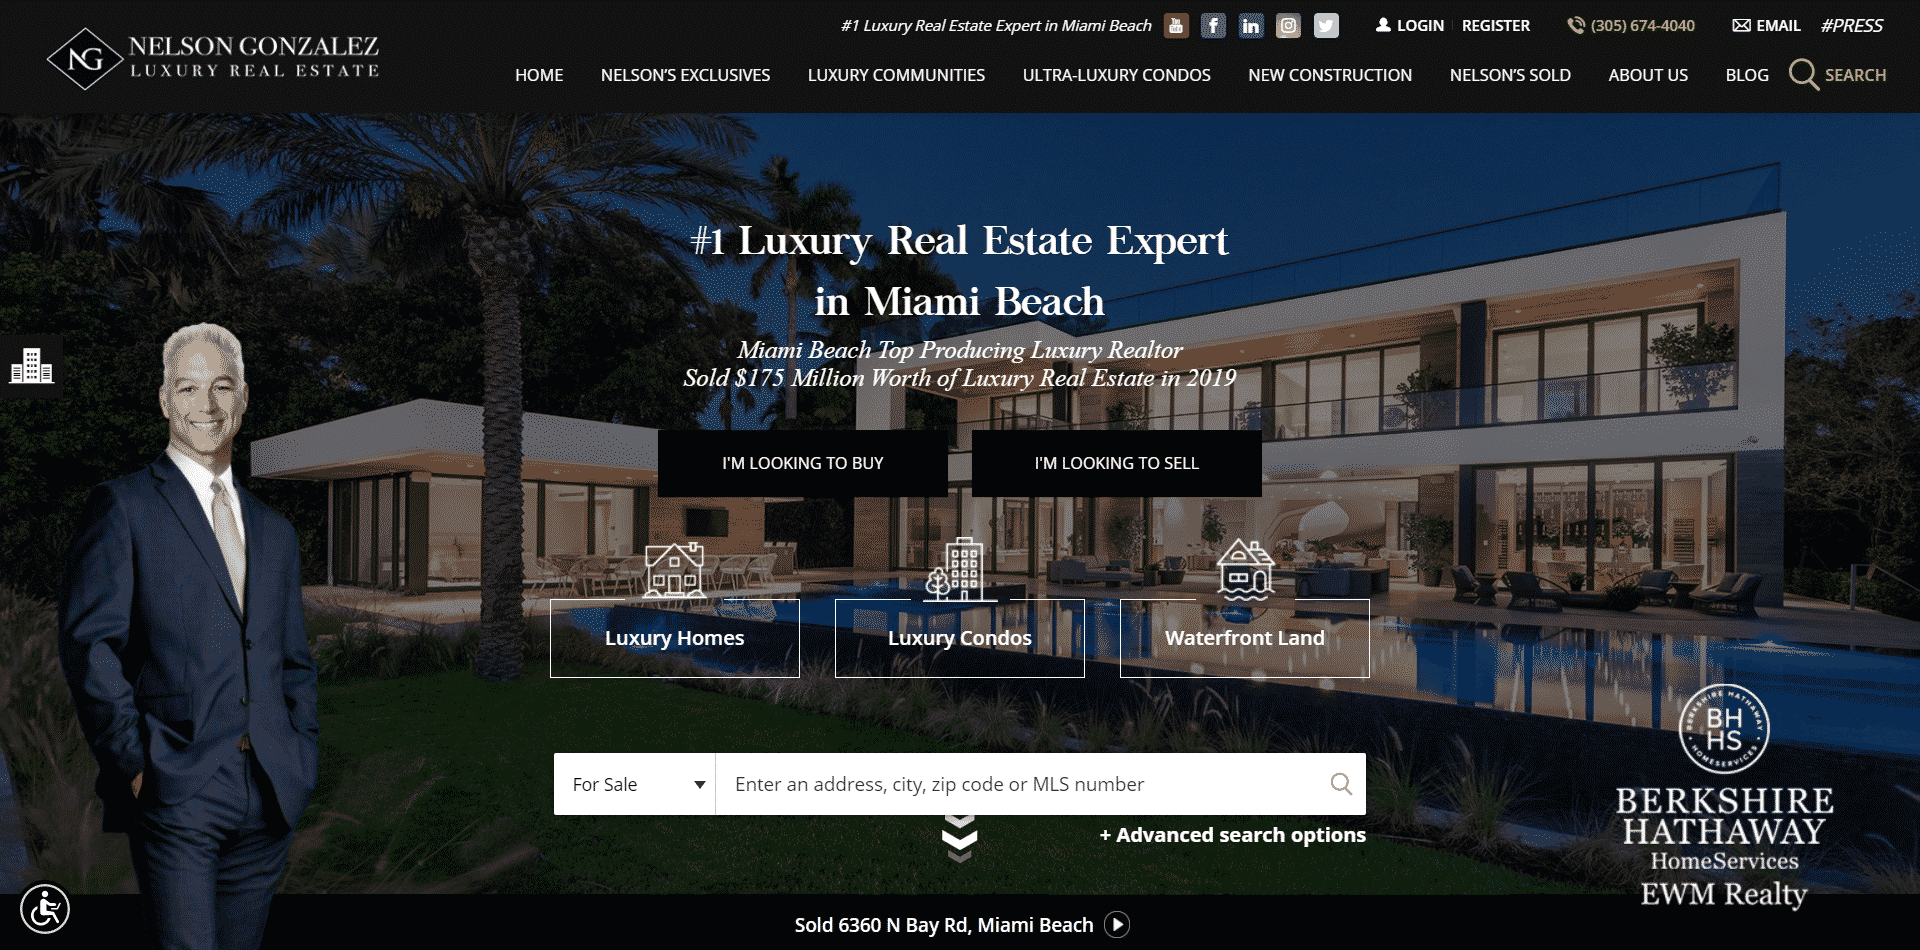 101 BEST Real Estate Websites (UPDATED) - Ranked & Reviewed